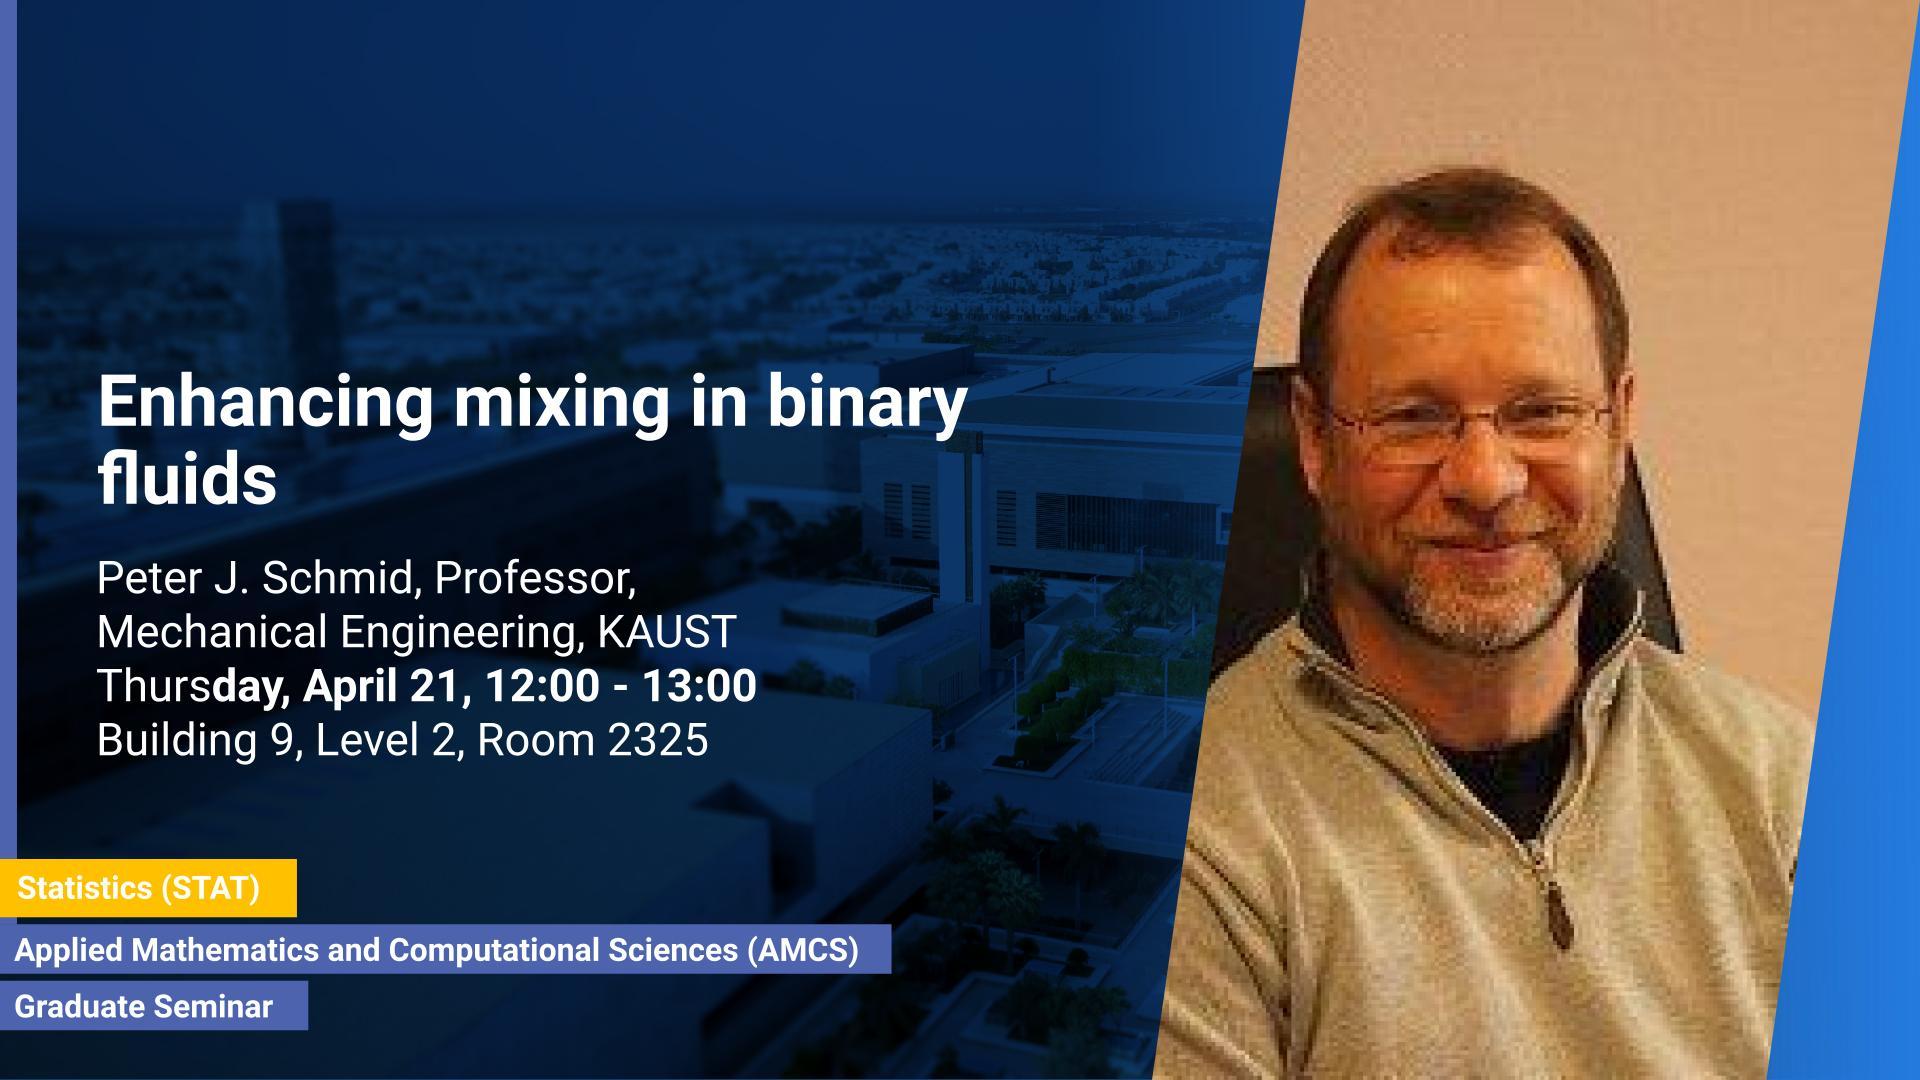 KAUST CEMSE AMCS STAT Graduate  Seminar  Peter J Schmid Enhancing mixing in binary fluids